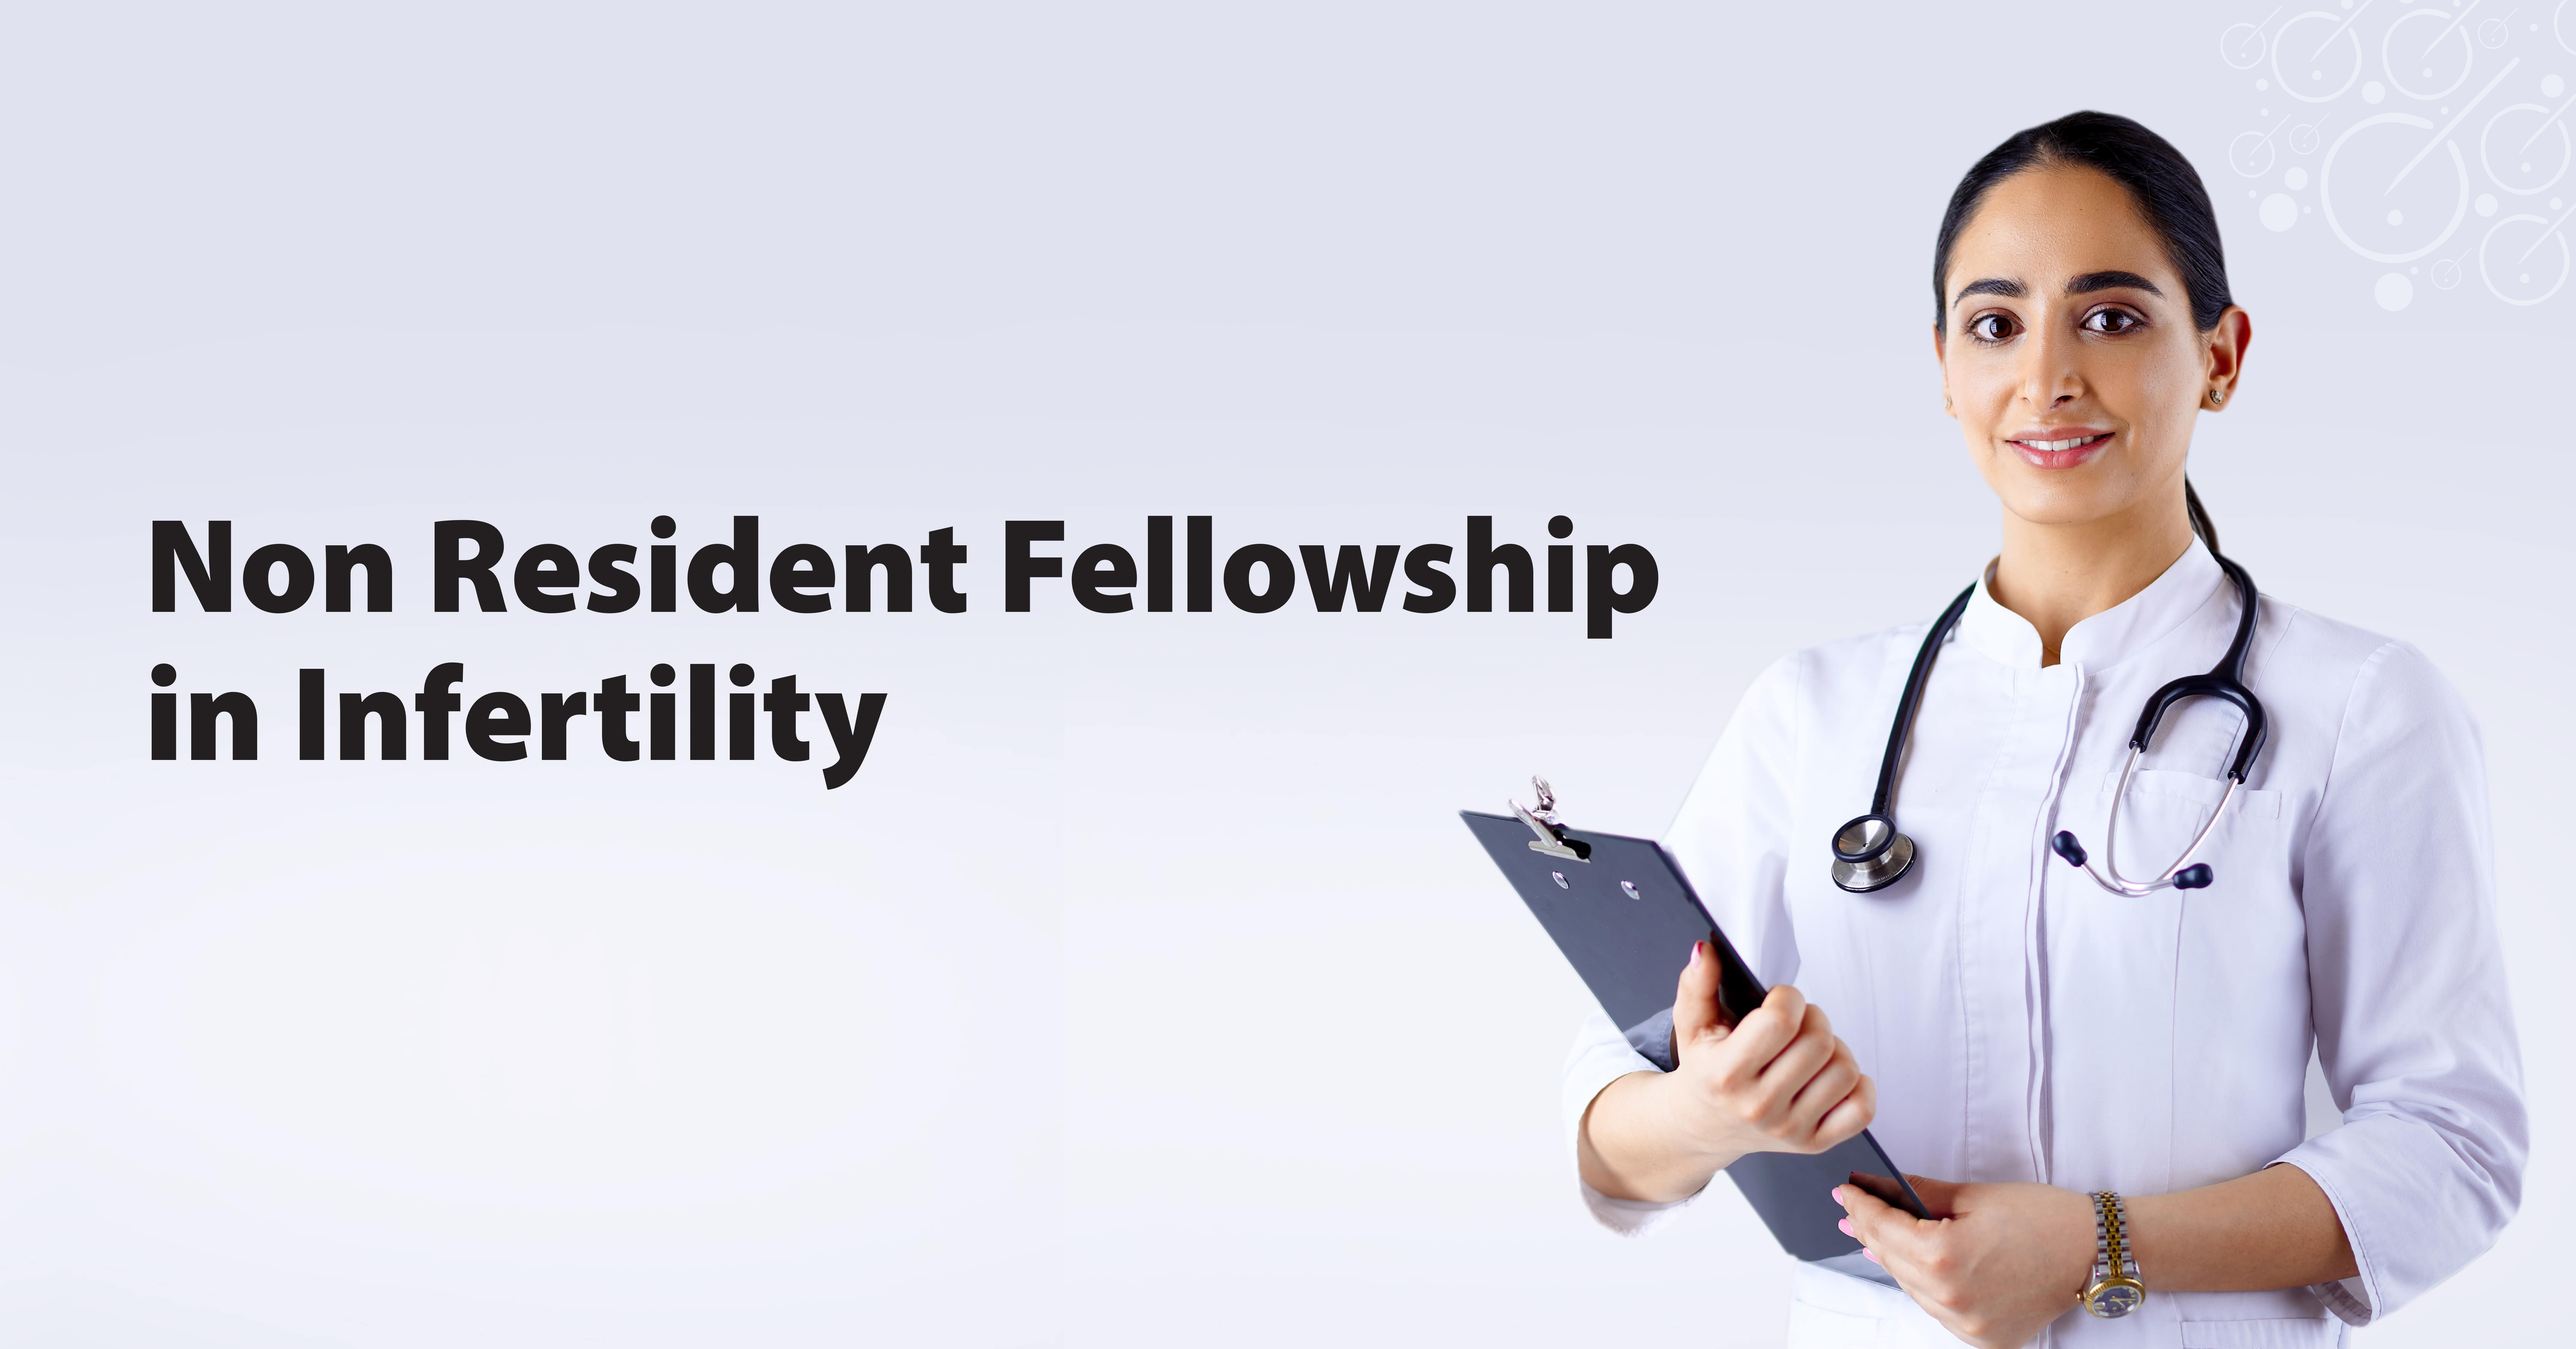 Non-Resident Fellowship in Infertility